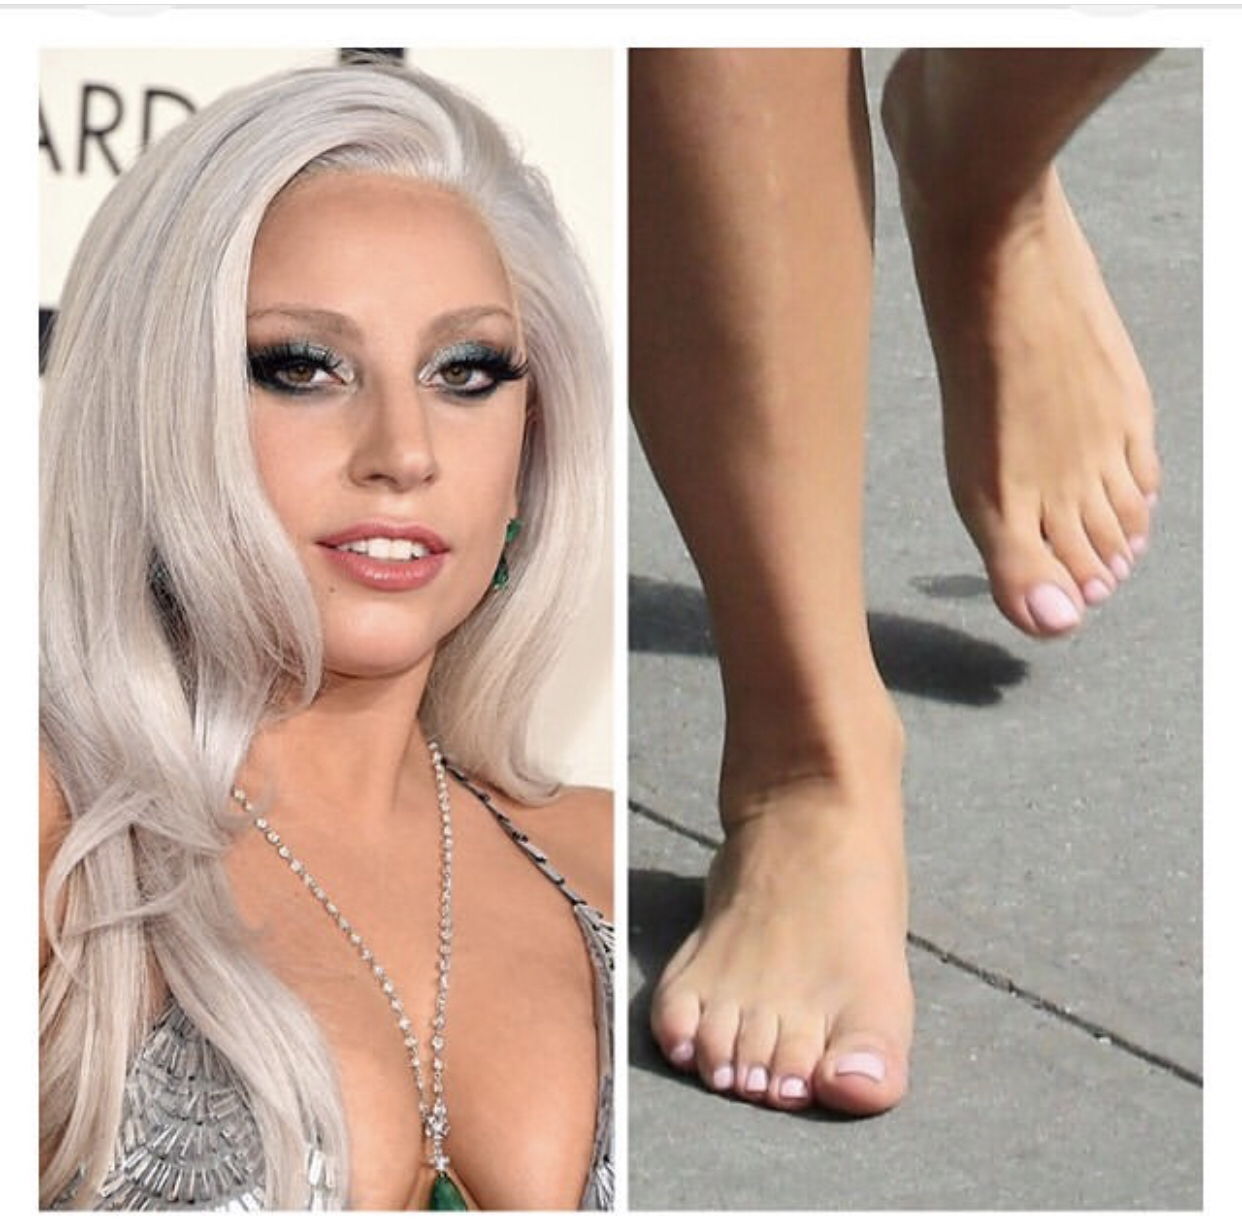 Lady Gaga And Those Toes Fee